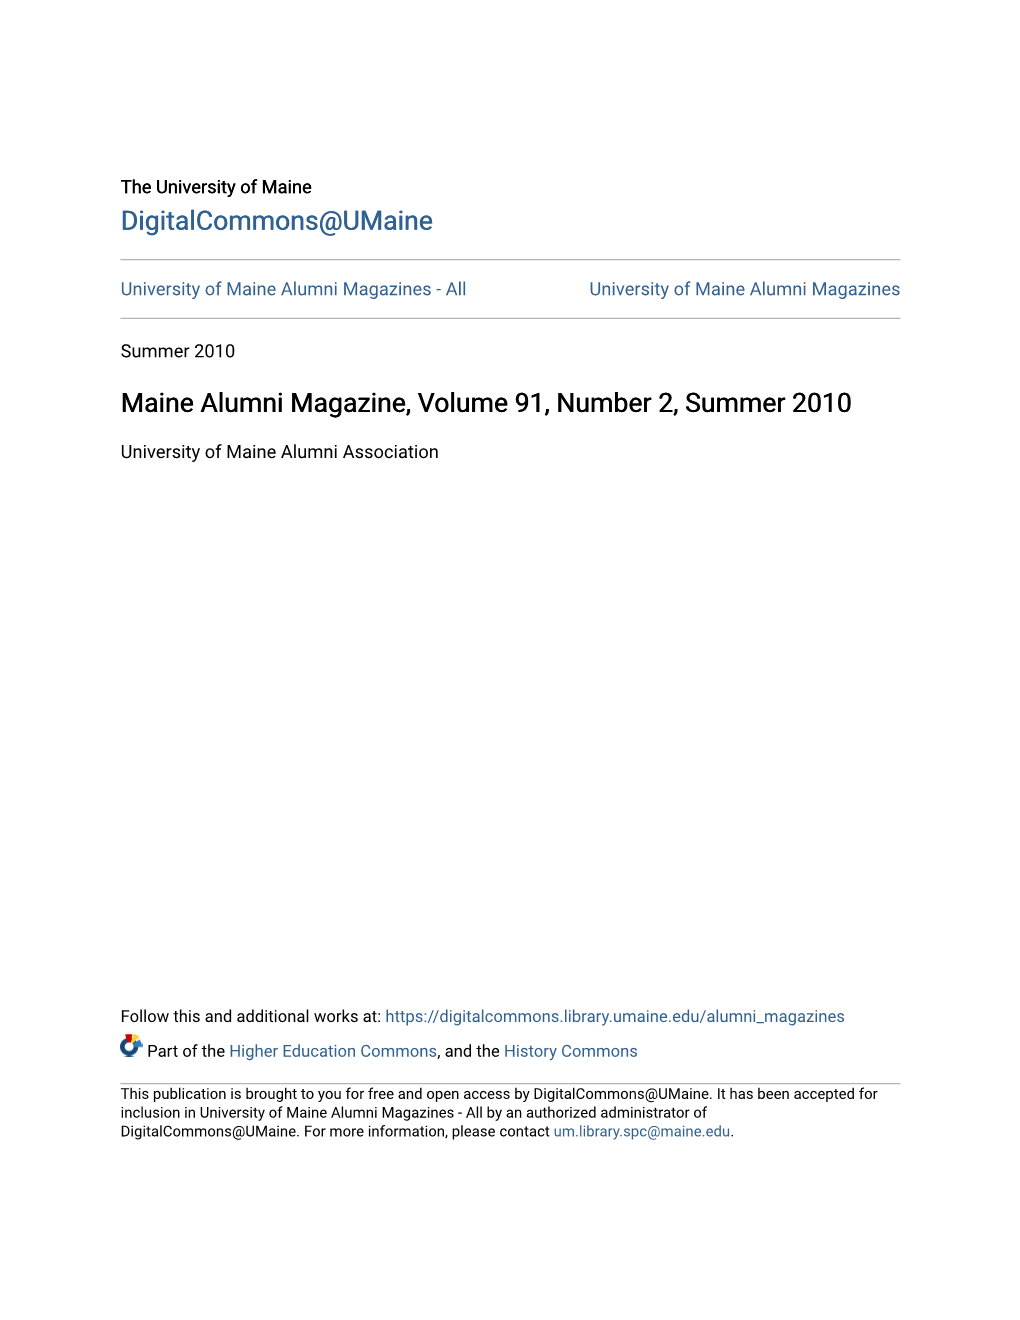 Maine Alumni Magazine, Volume 91, Number 2, Summer 2010